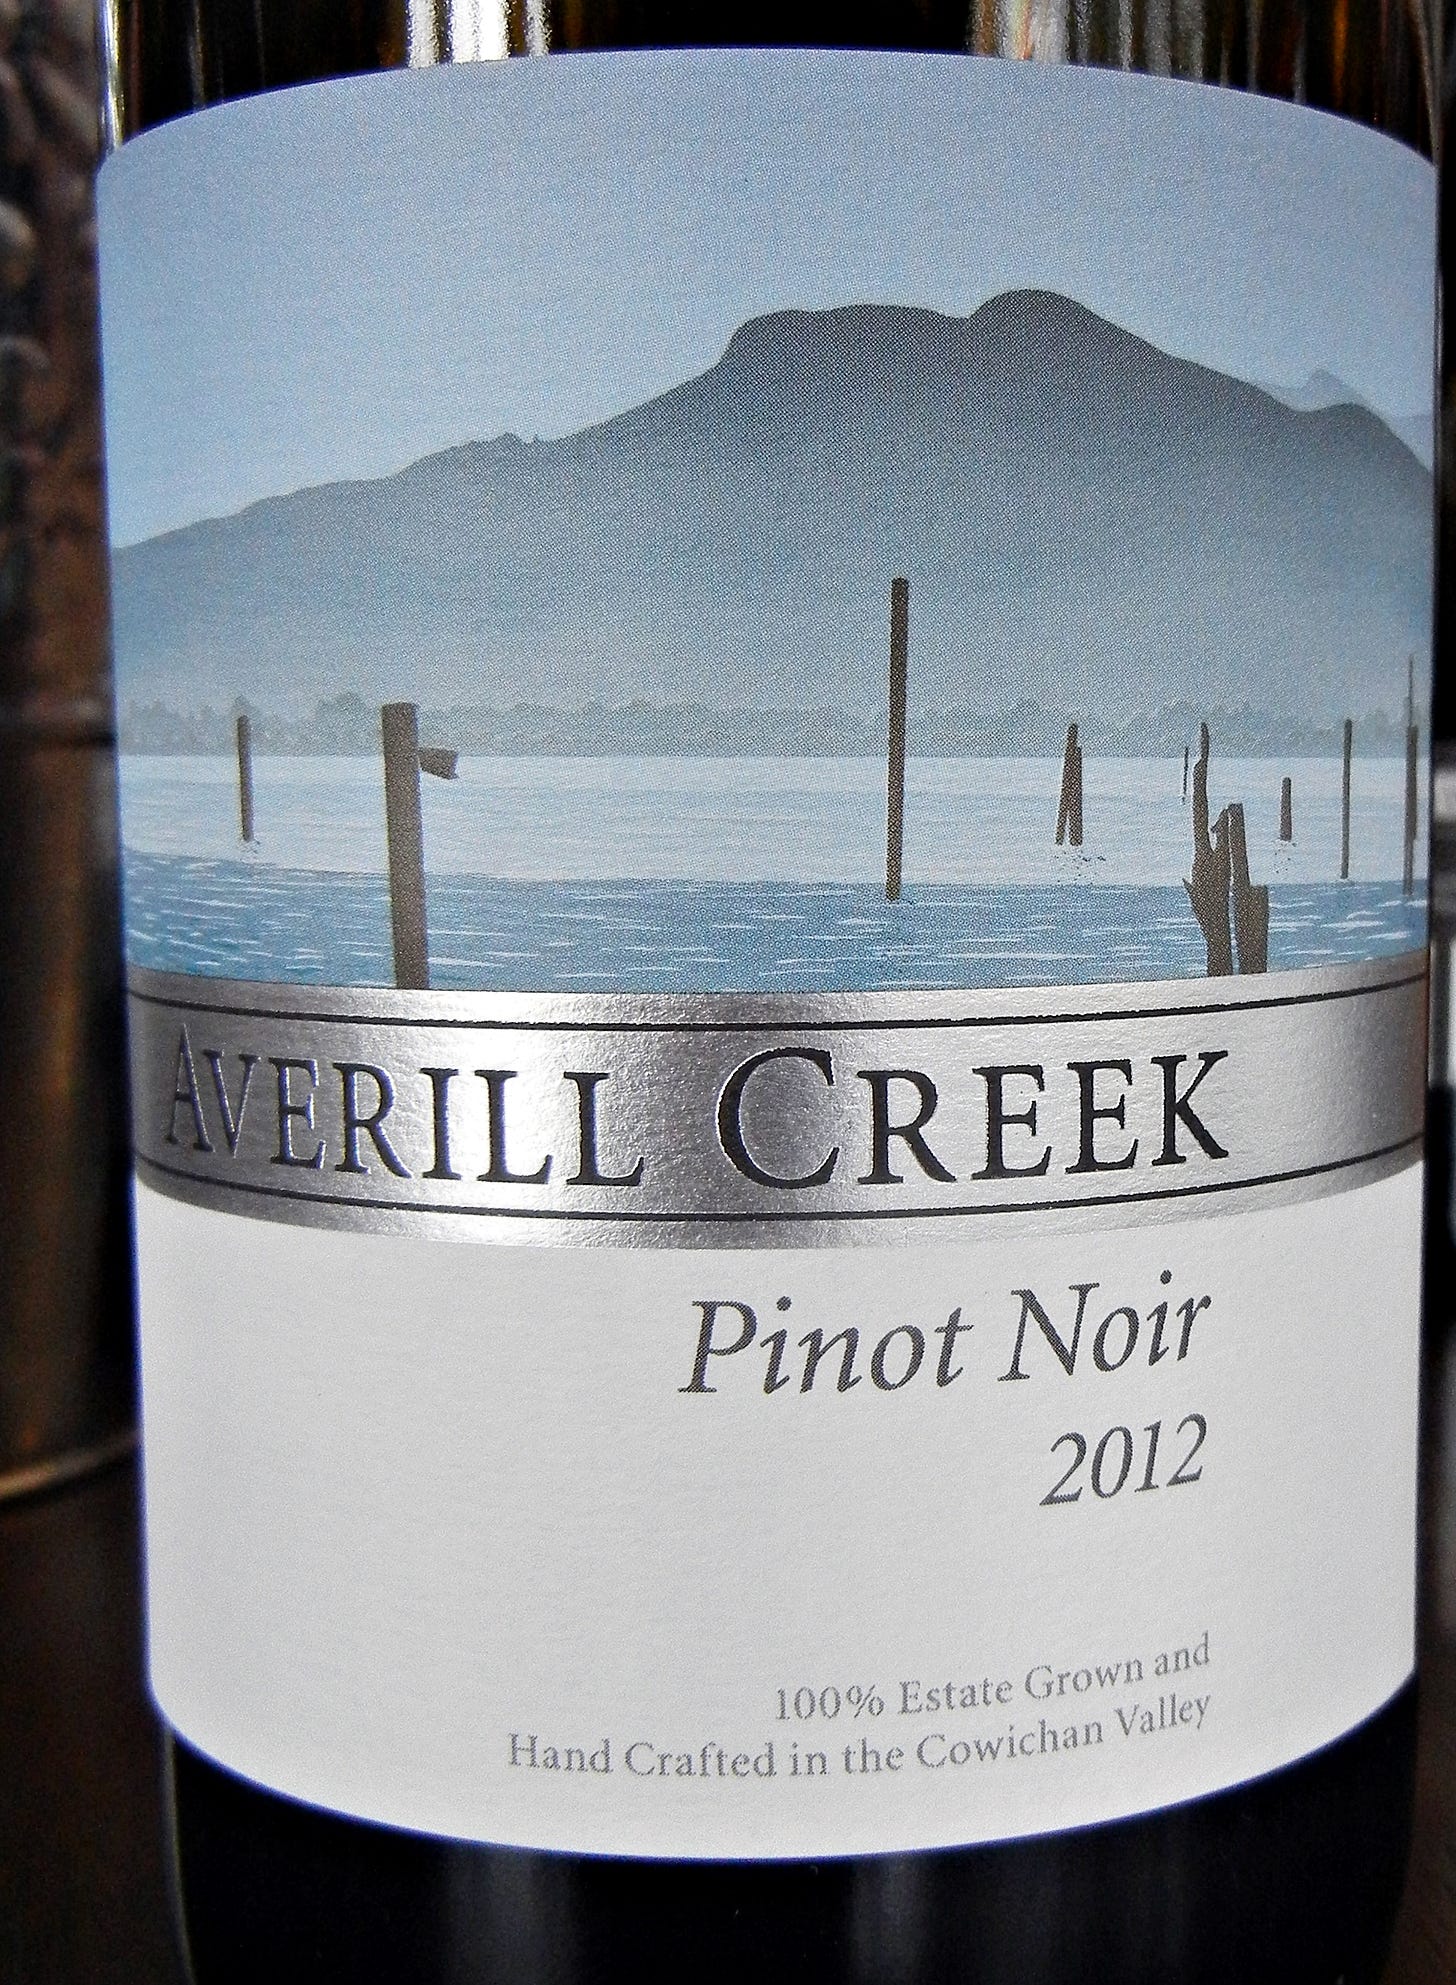 Averill Creek Pinot Noir 2012 Label - BC Pinot Noir Tasting Review 24 